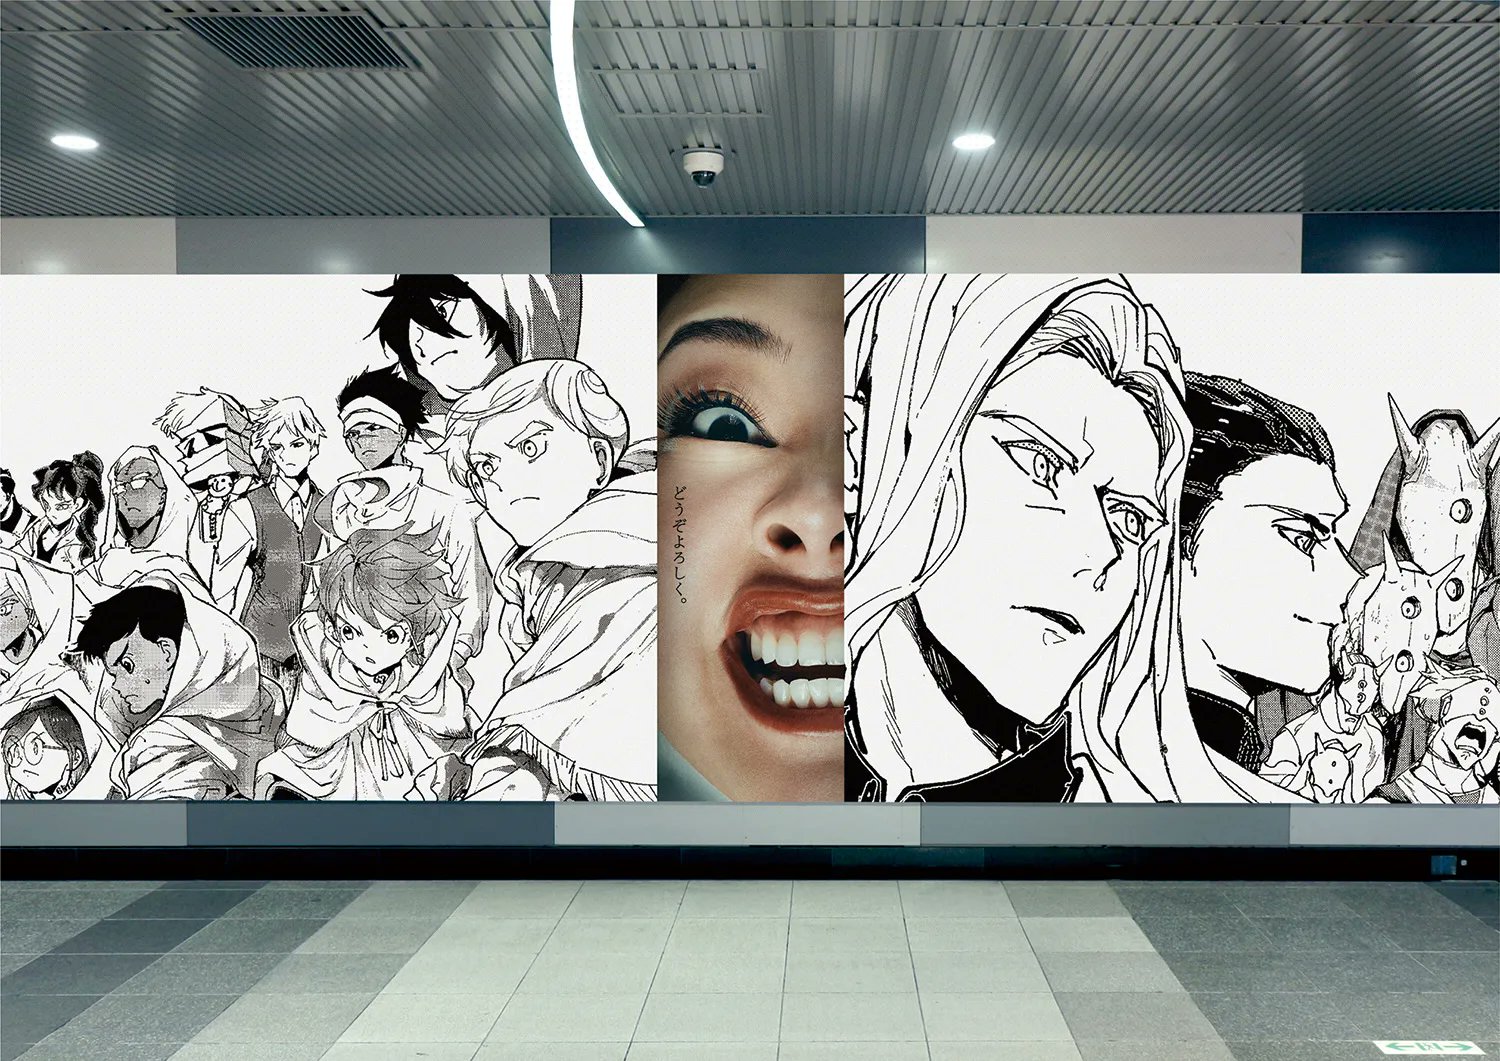 Tokyo Shibuya Station 100-Foot Anime Mural Info